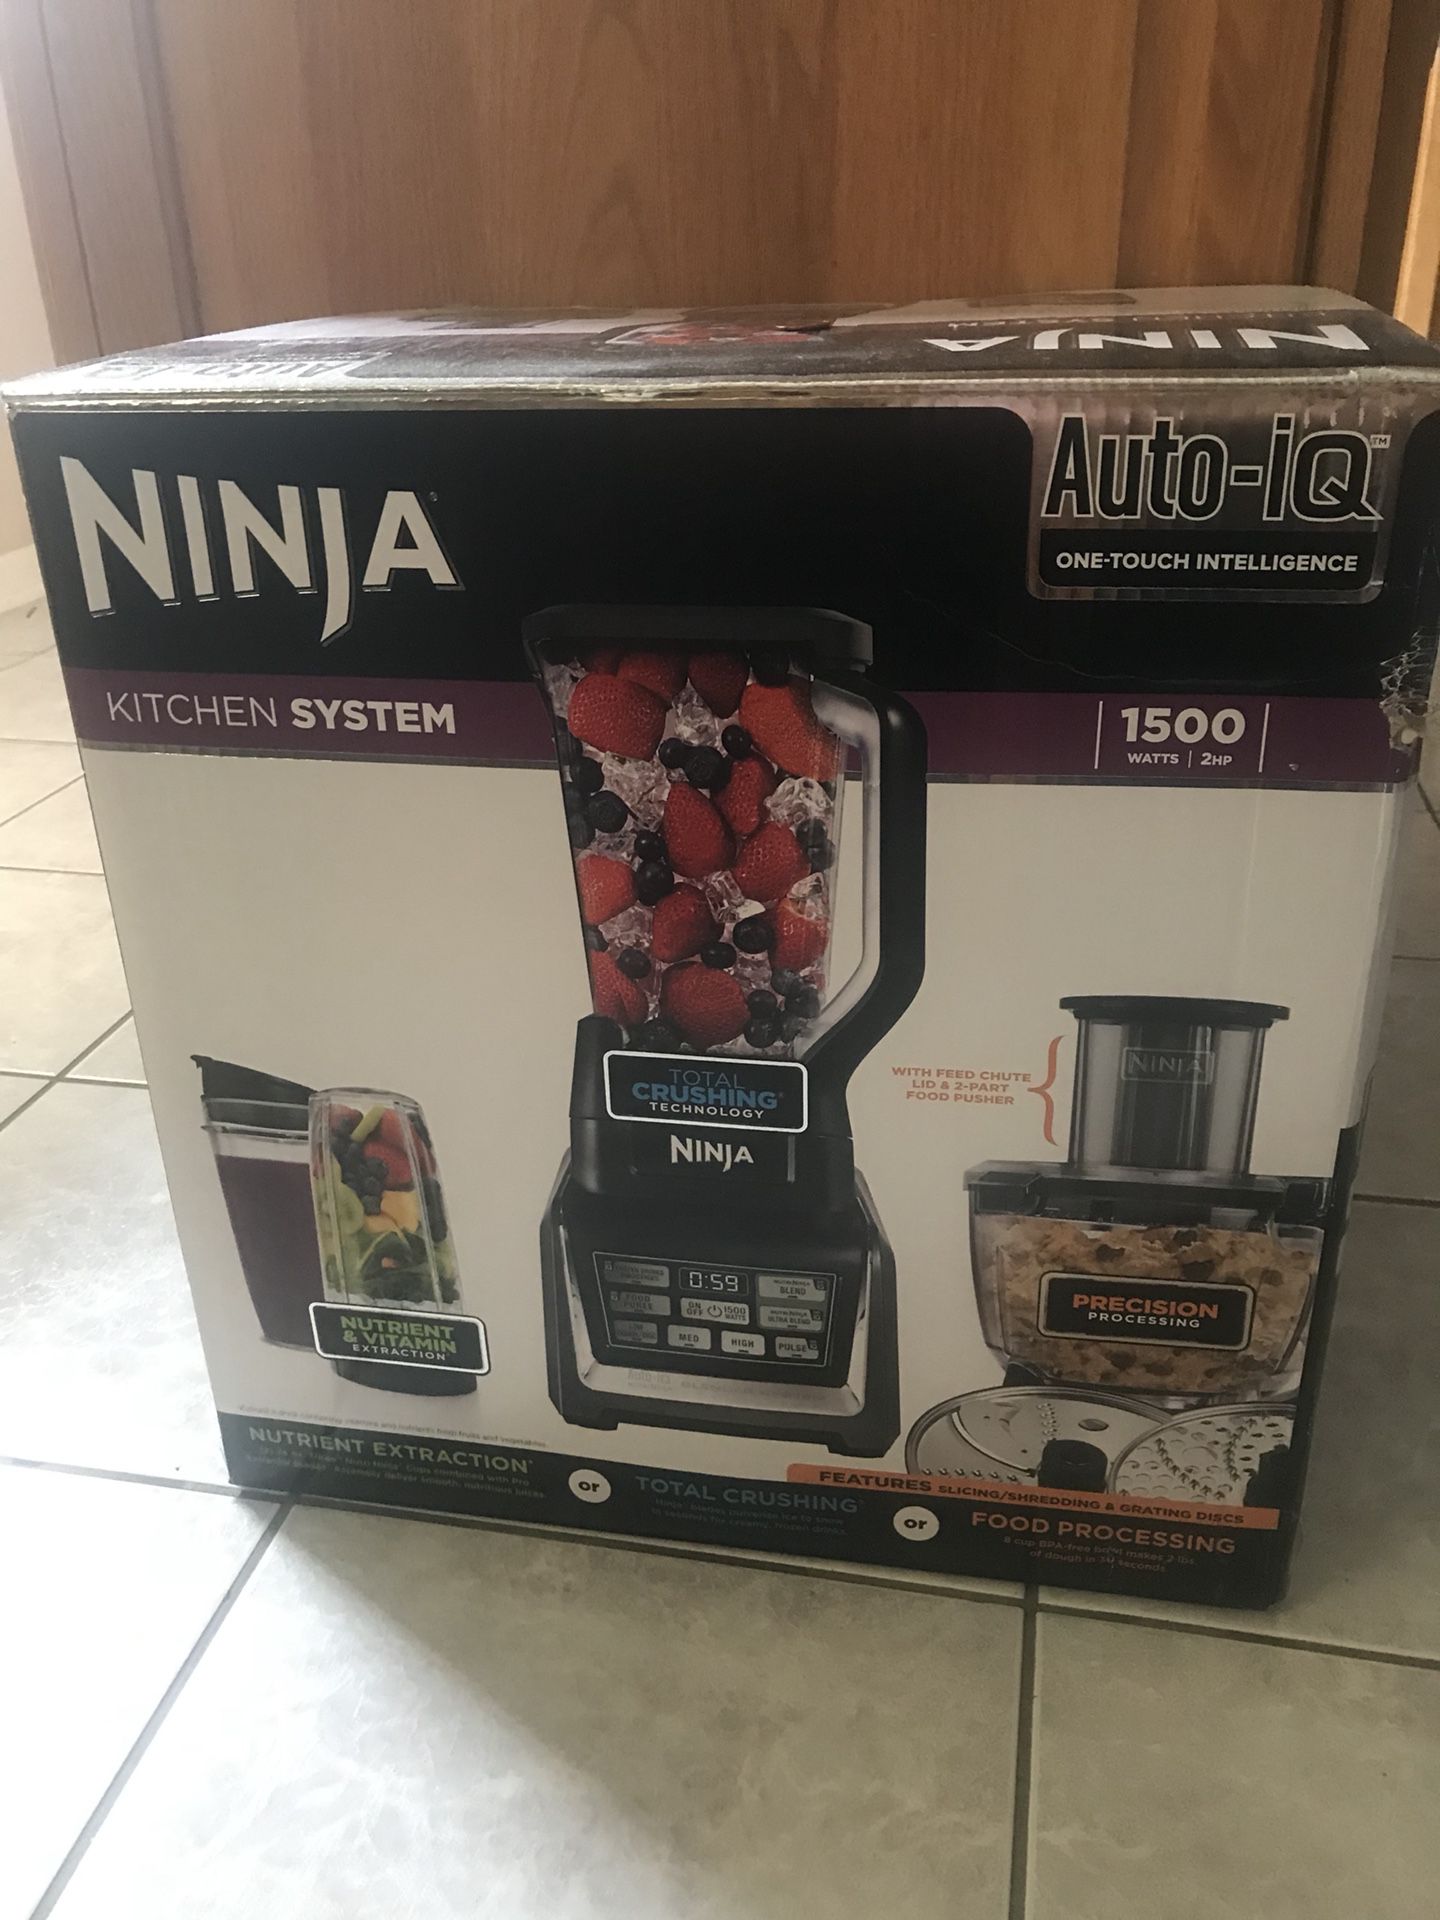 Ninja Auto-iQ Brand New in Box, never opened or used.